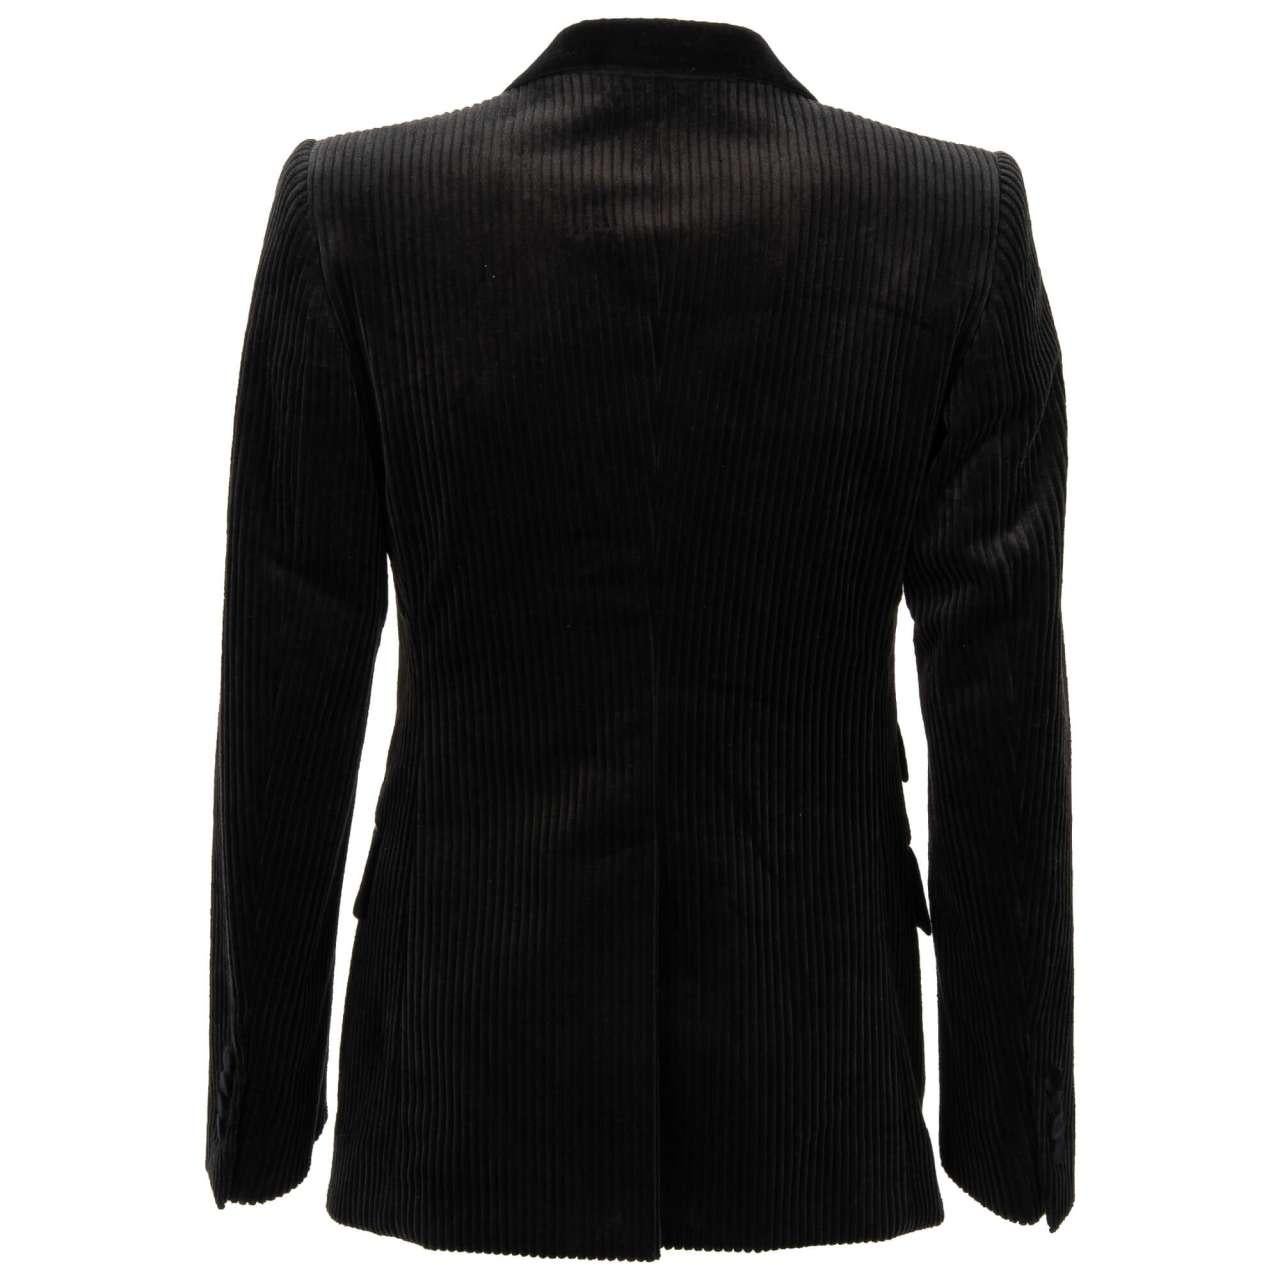 Dolce & Gabbana Floral Corduloy Blazer Tuxedo Jacket Black Gold 46 36 S For Sale 1